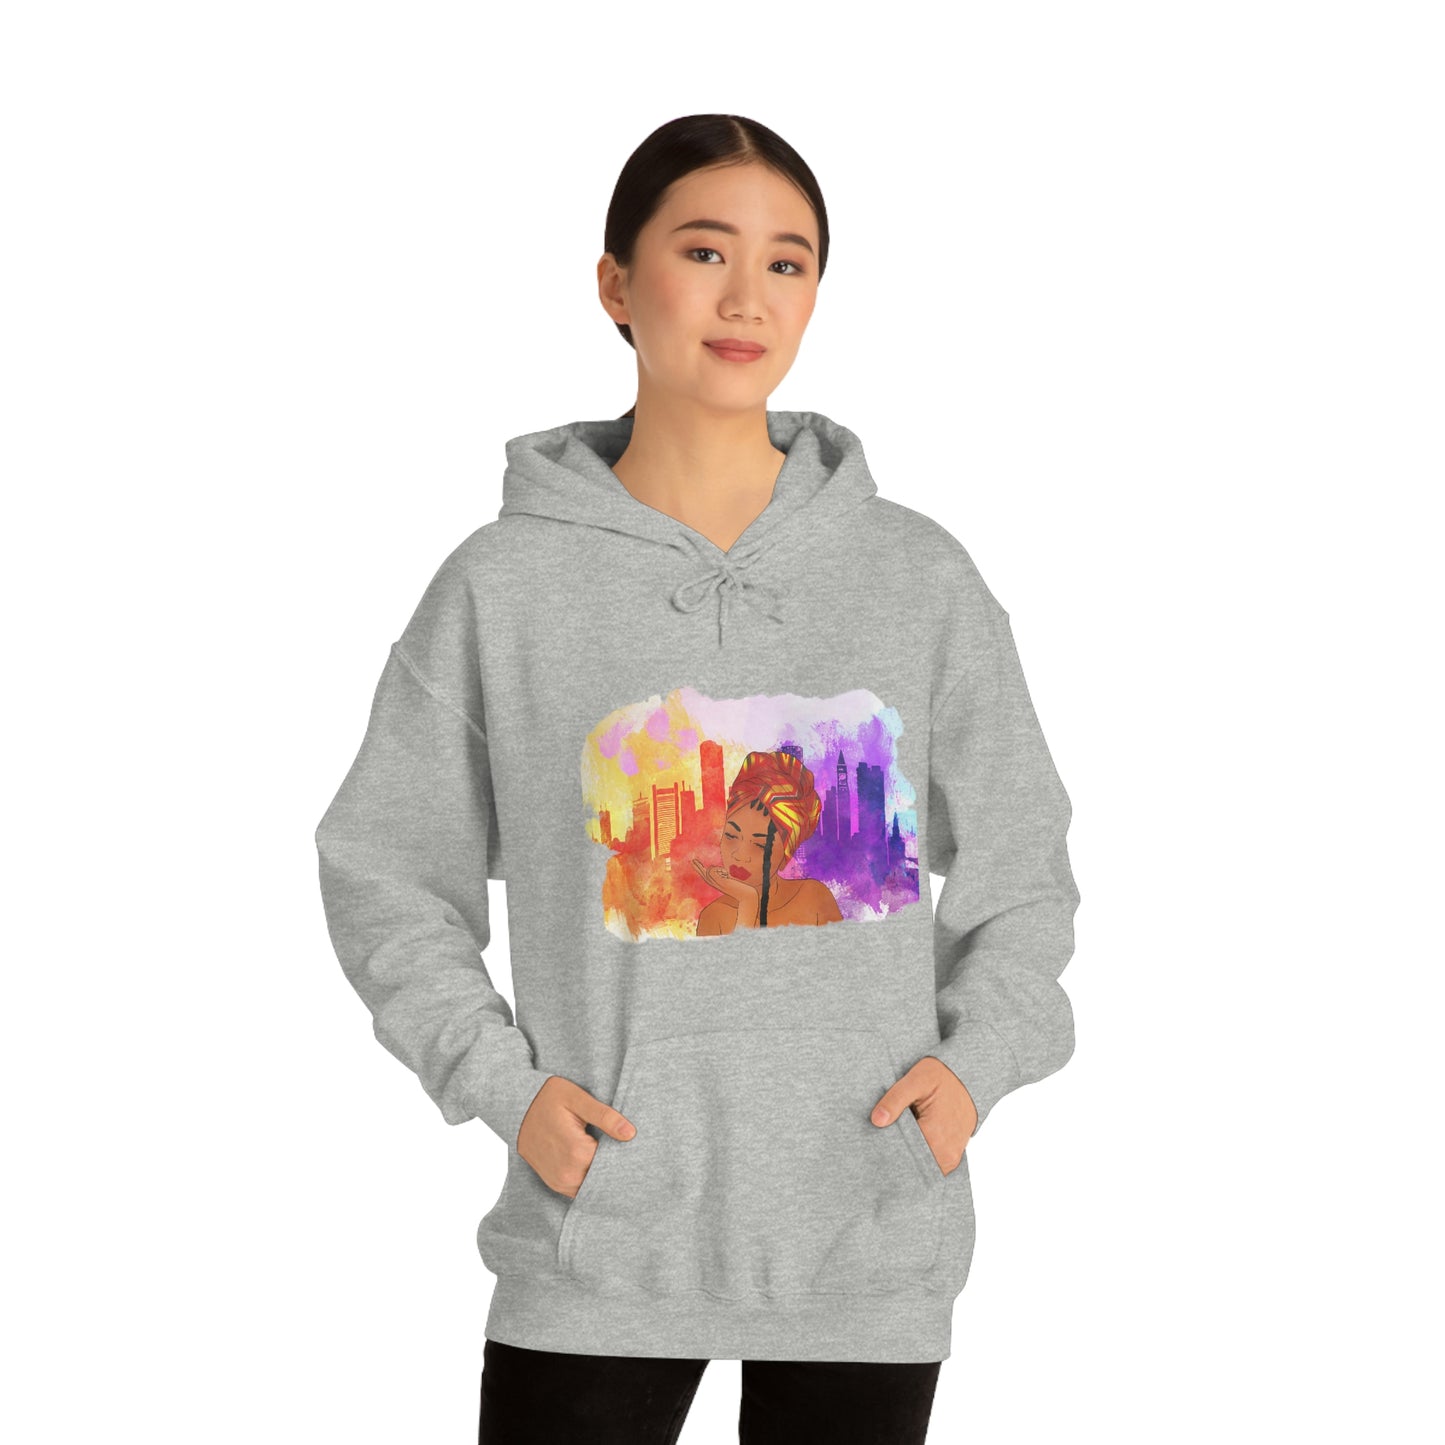 Lady in the City Hooded Sweatshirt